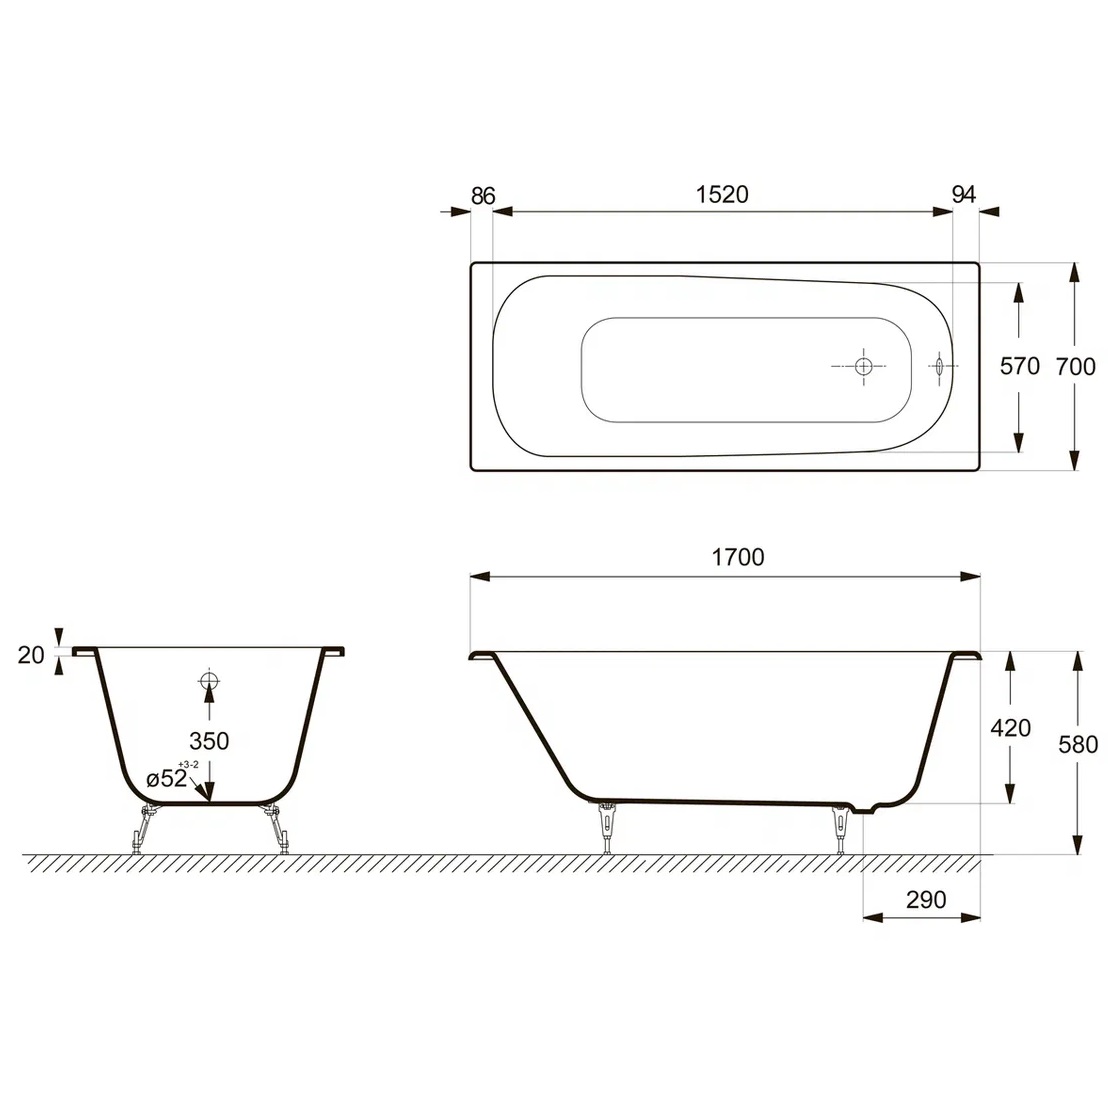 Ванна чугунная Delice Continental DLR230613-AS 170х70 (белый), встраиваемая с антискользящим покрытием